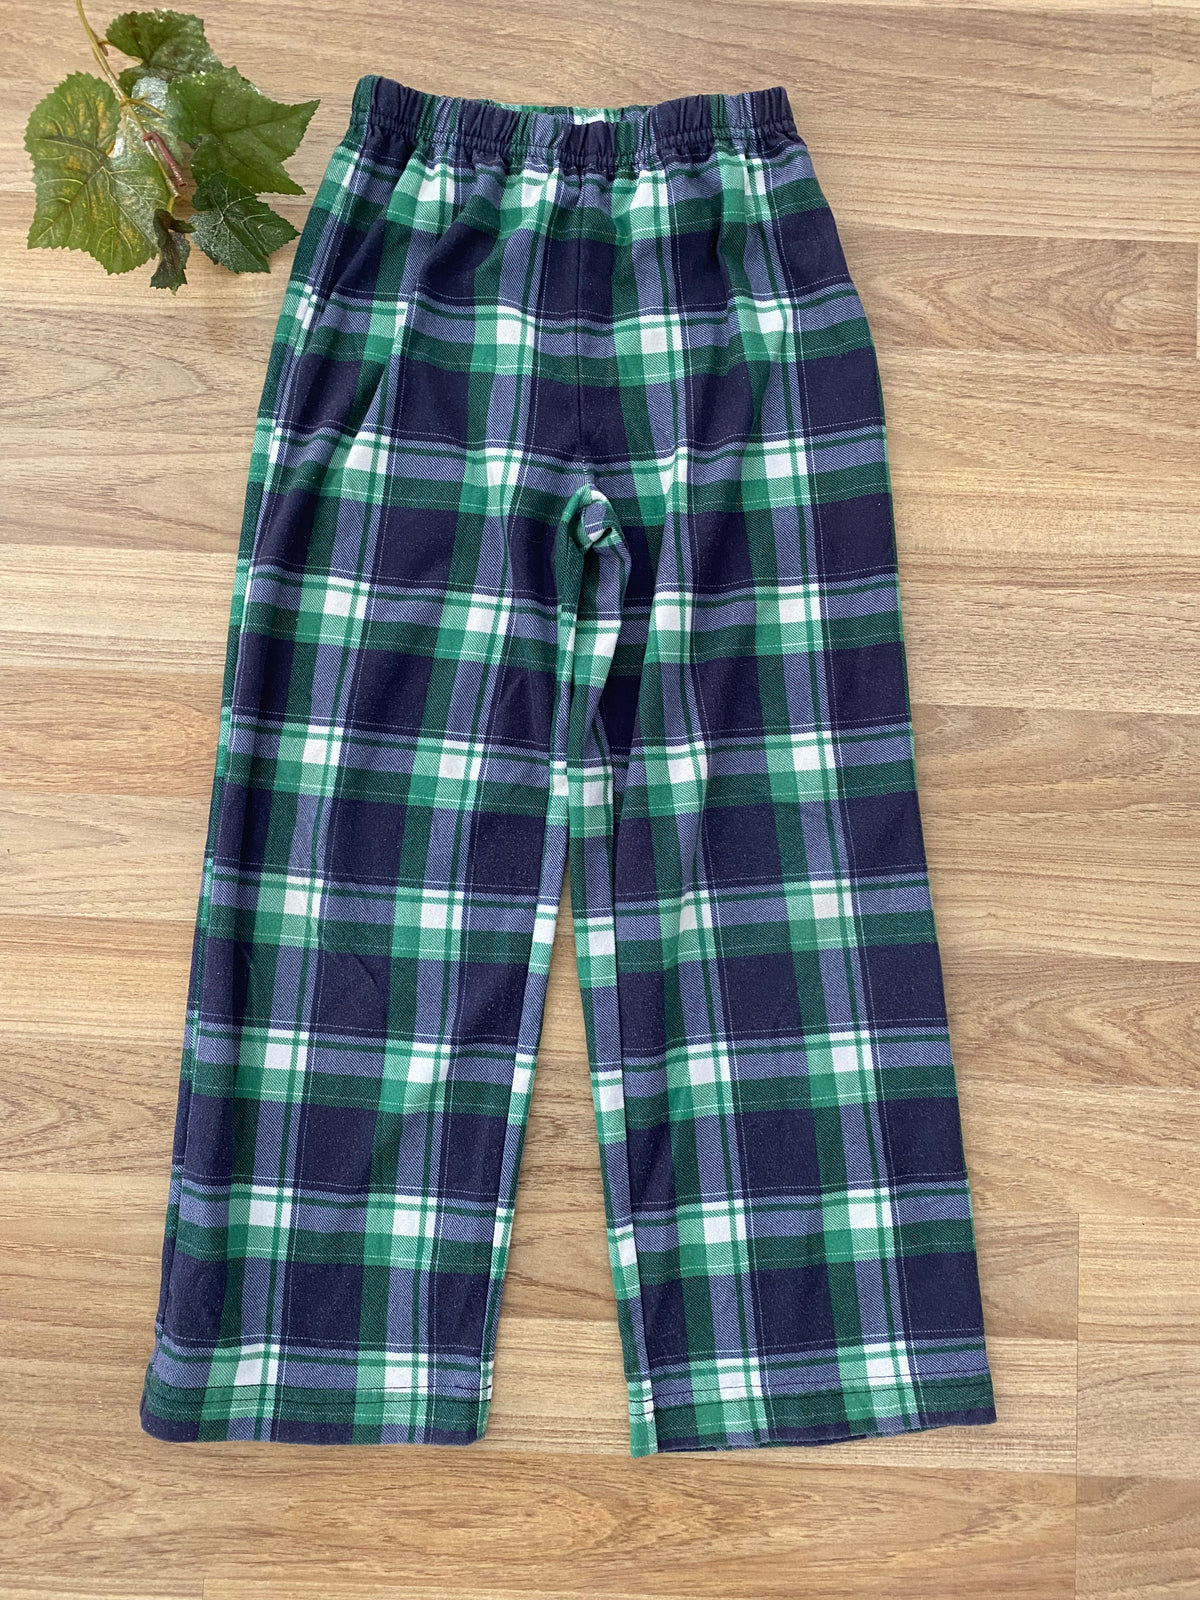 Pajama Pants (Girls Size 4-5)